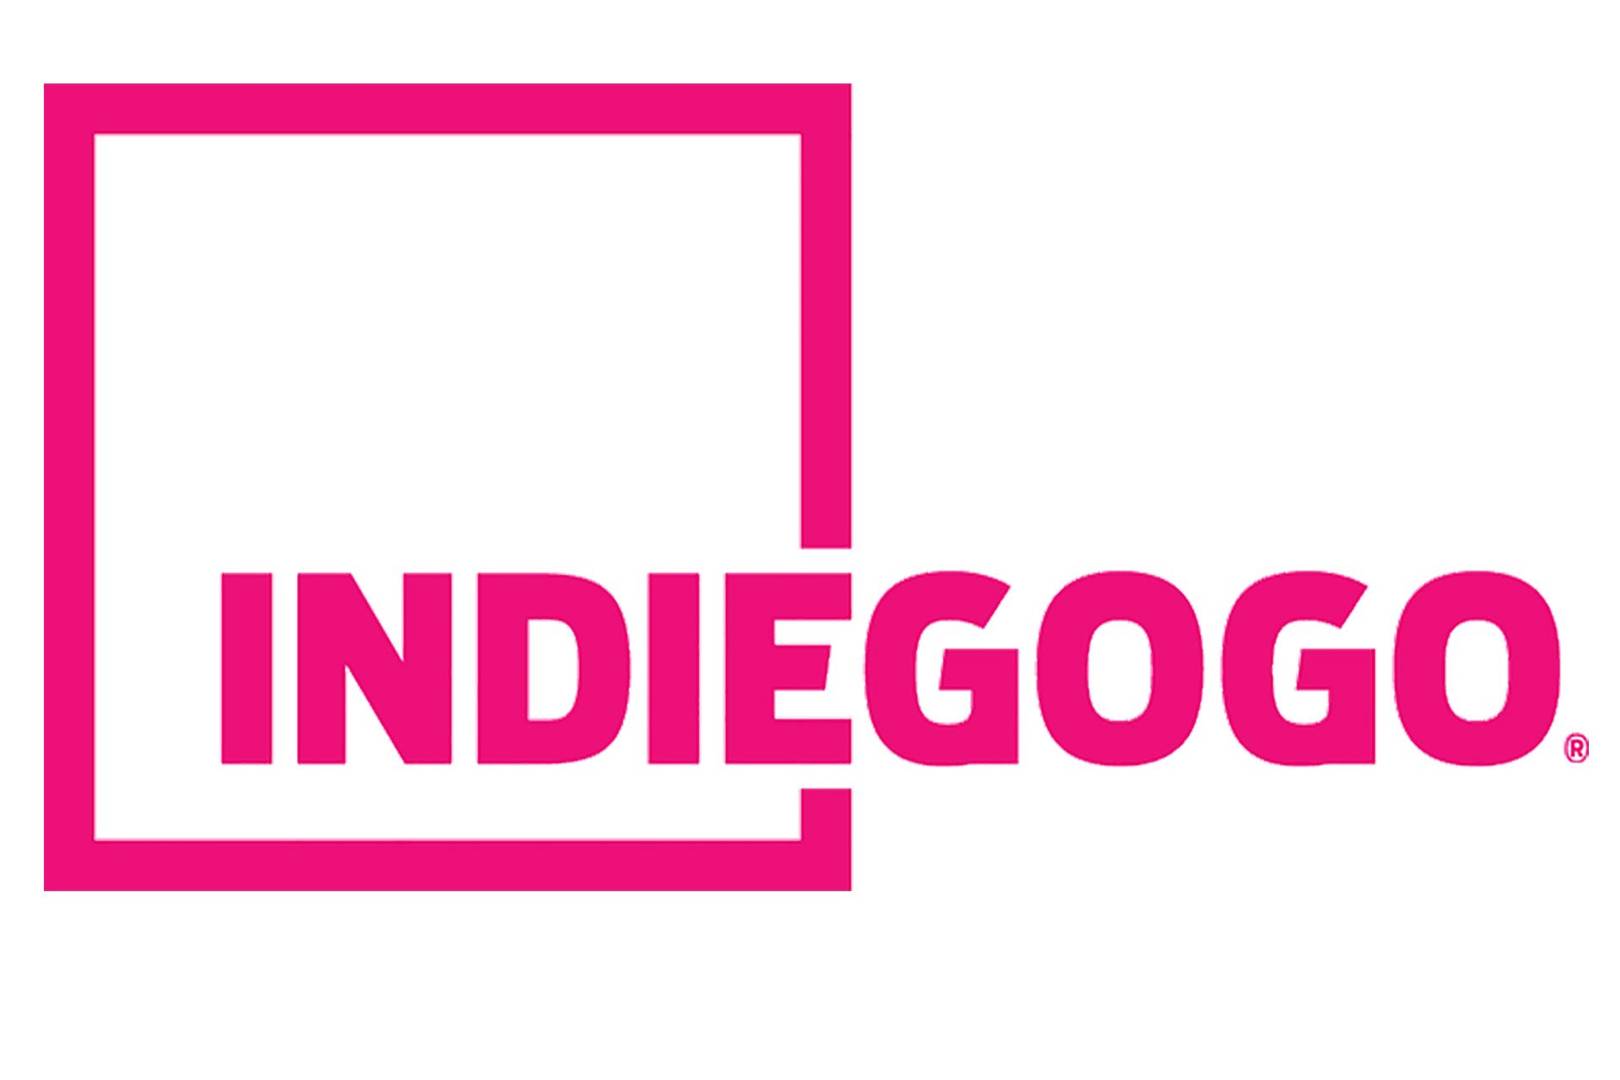 Indiegogo Logo - How to make money on crowdfunding site Indiegogo